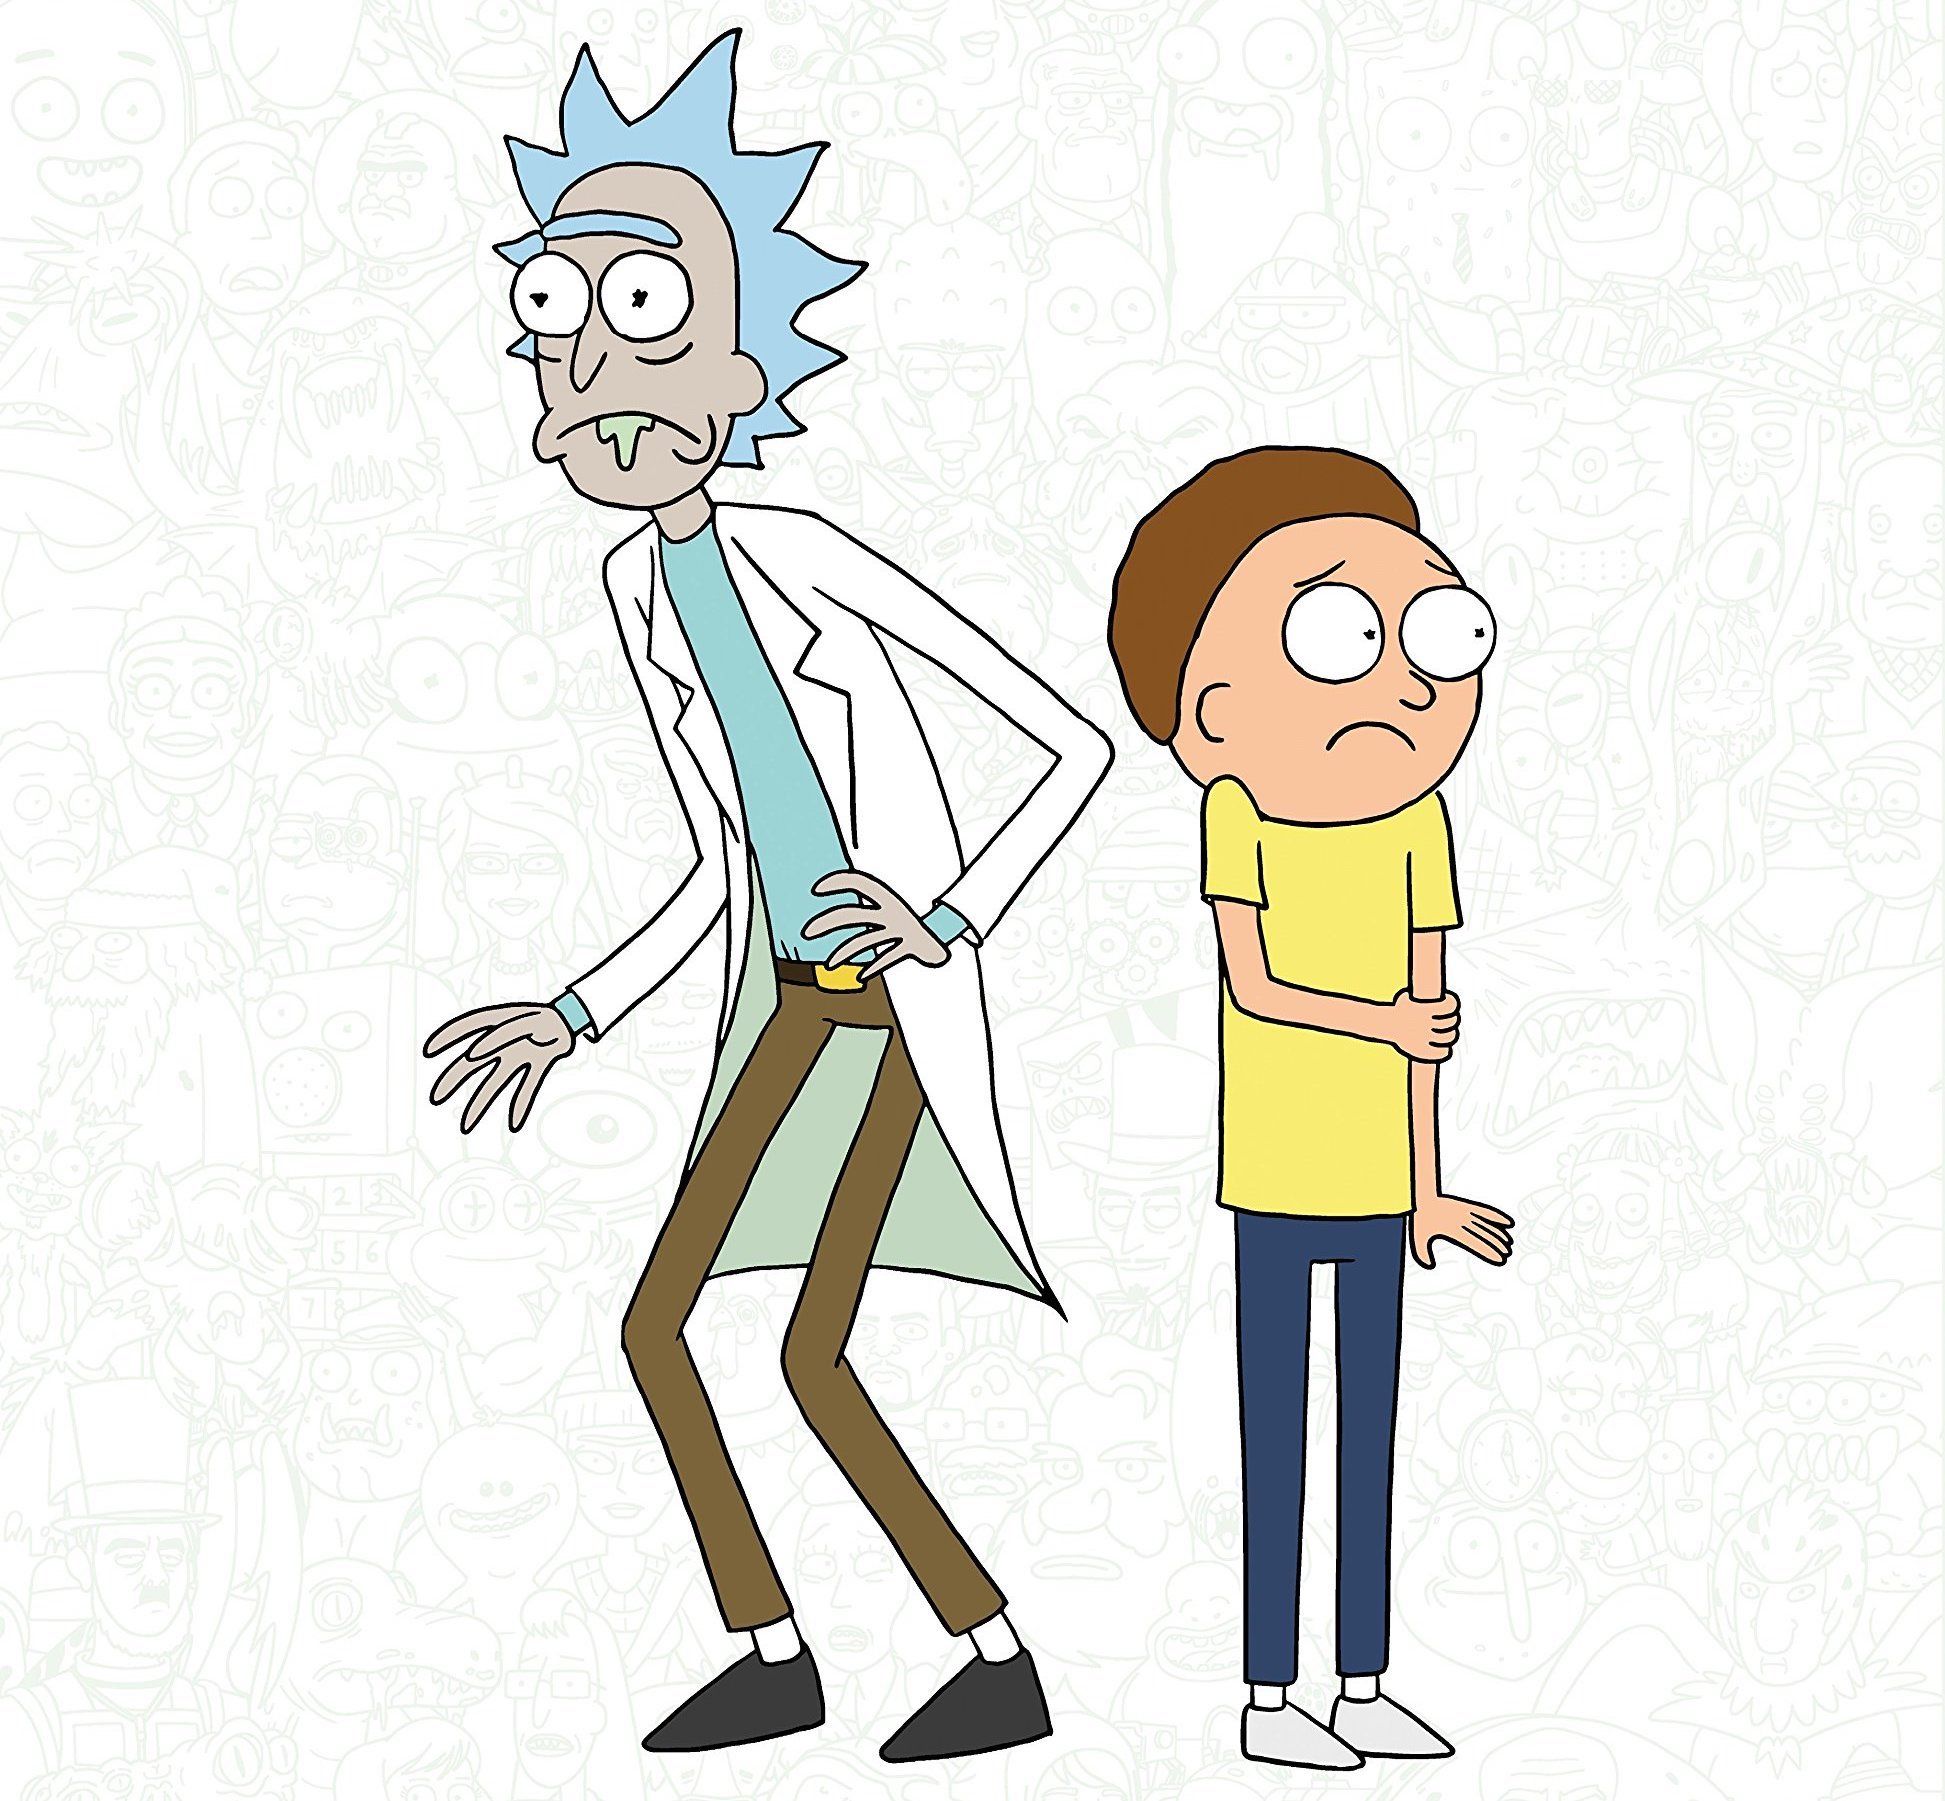 Rick and Morty (evidenza)